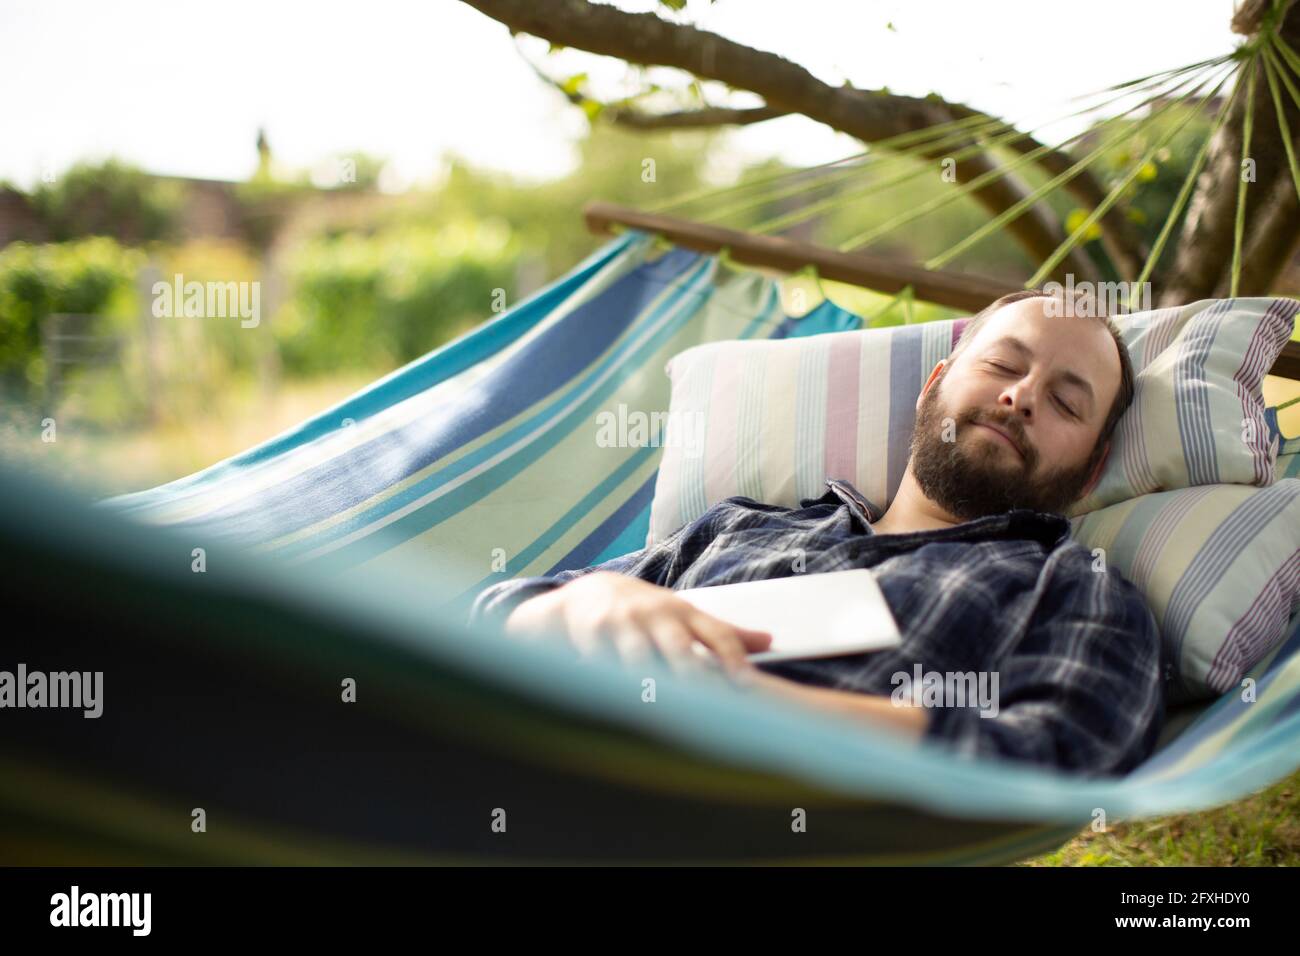 Serene man with digital tablet sleeping in backyard summer hammock Stock Photo